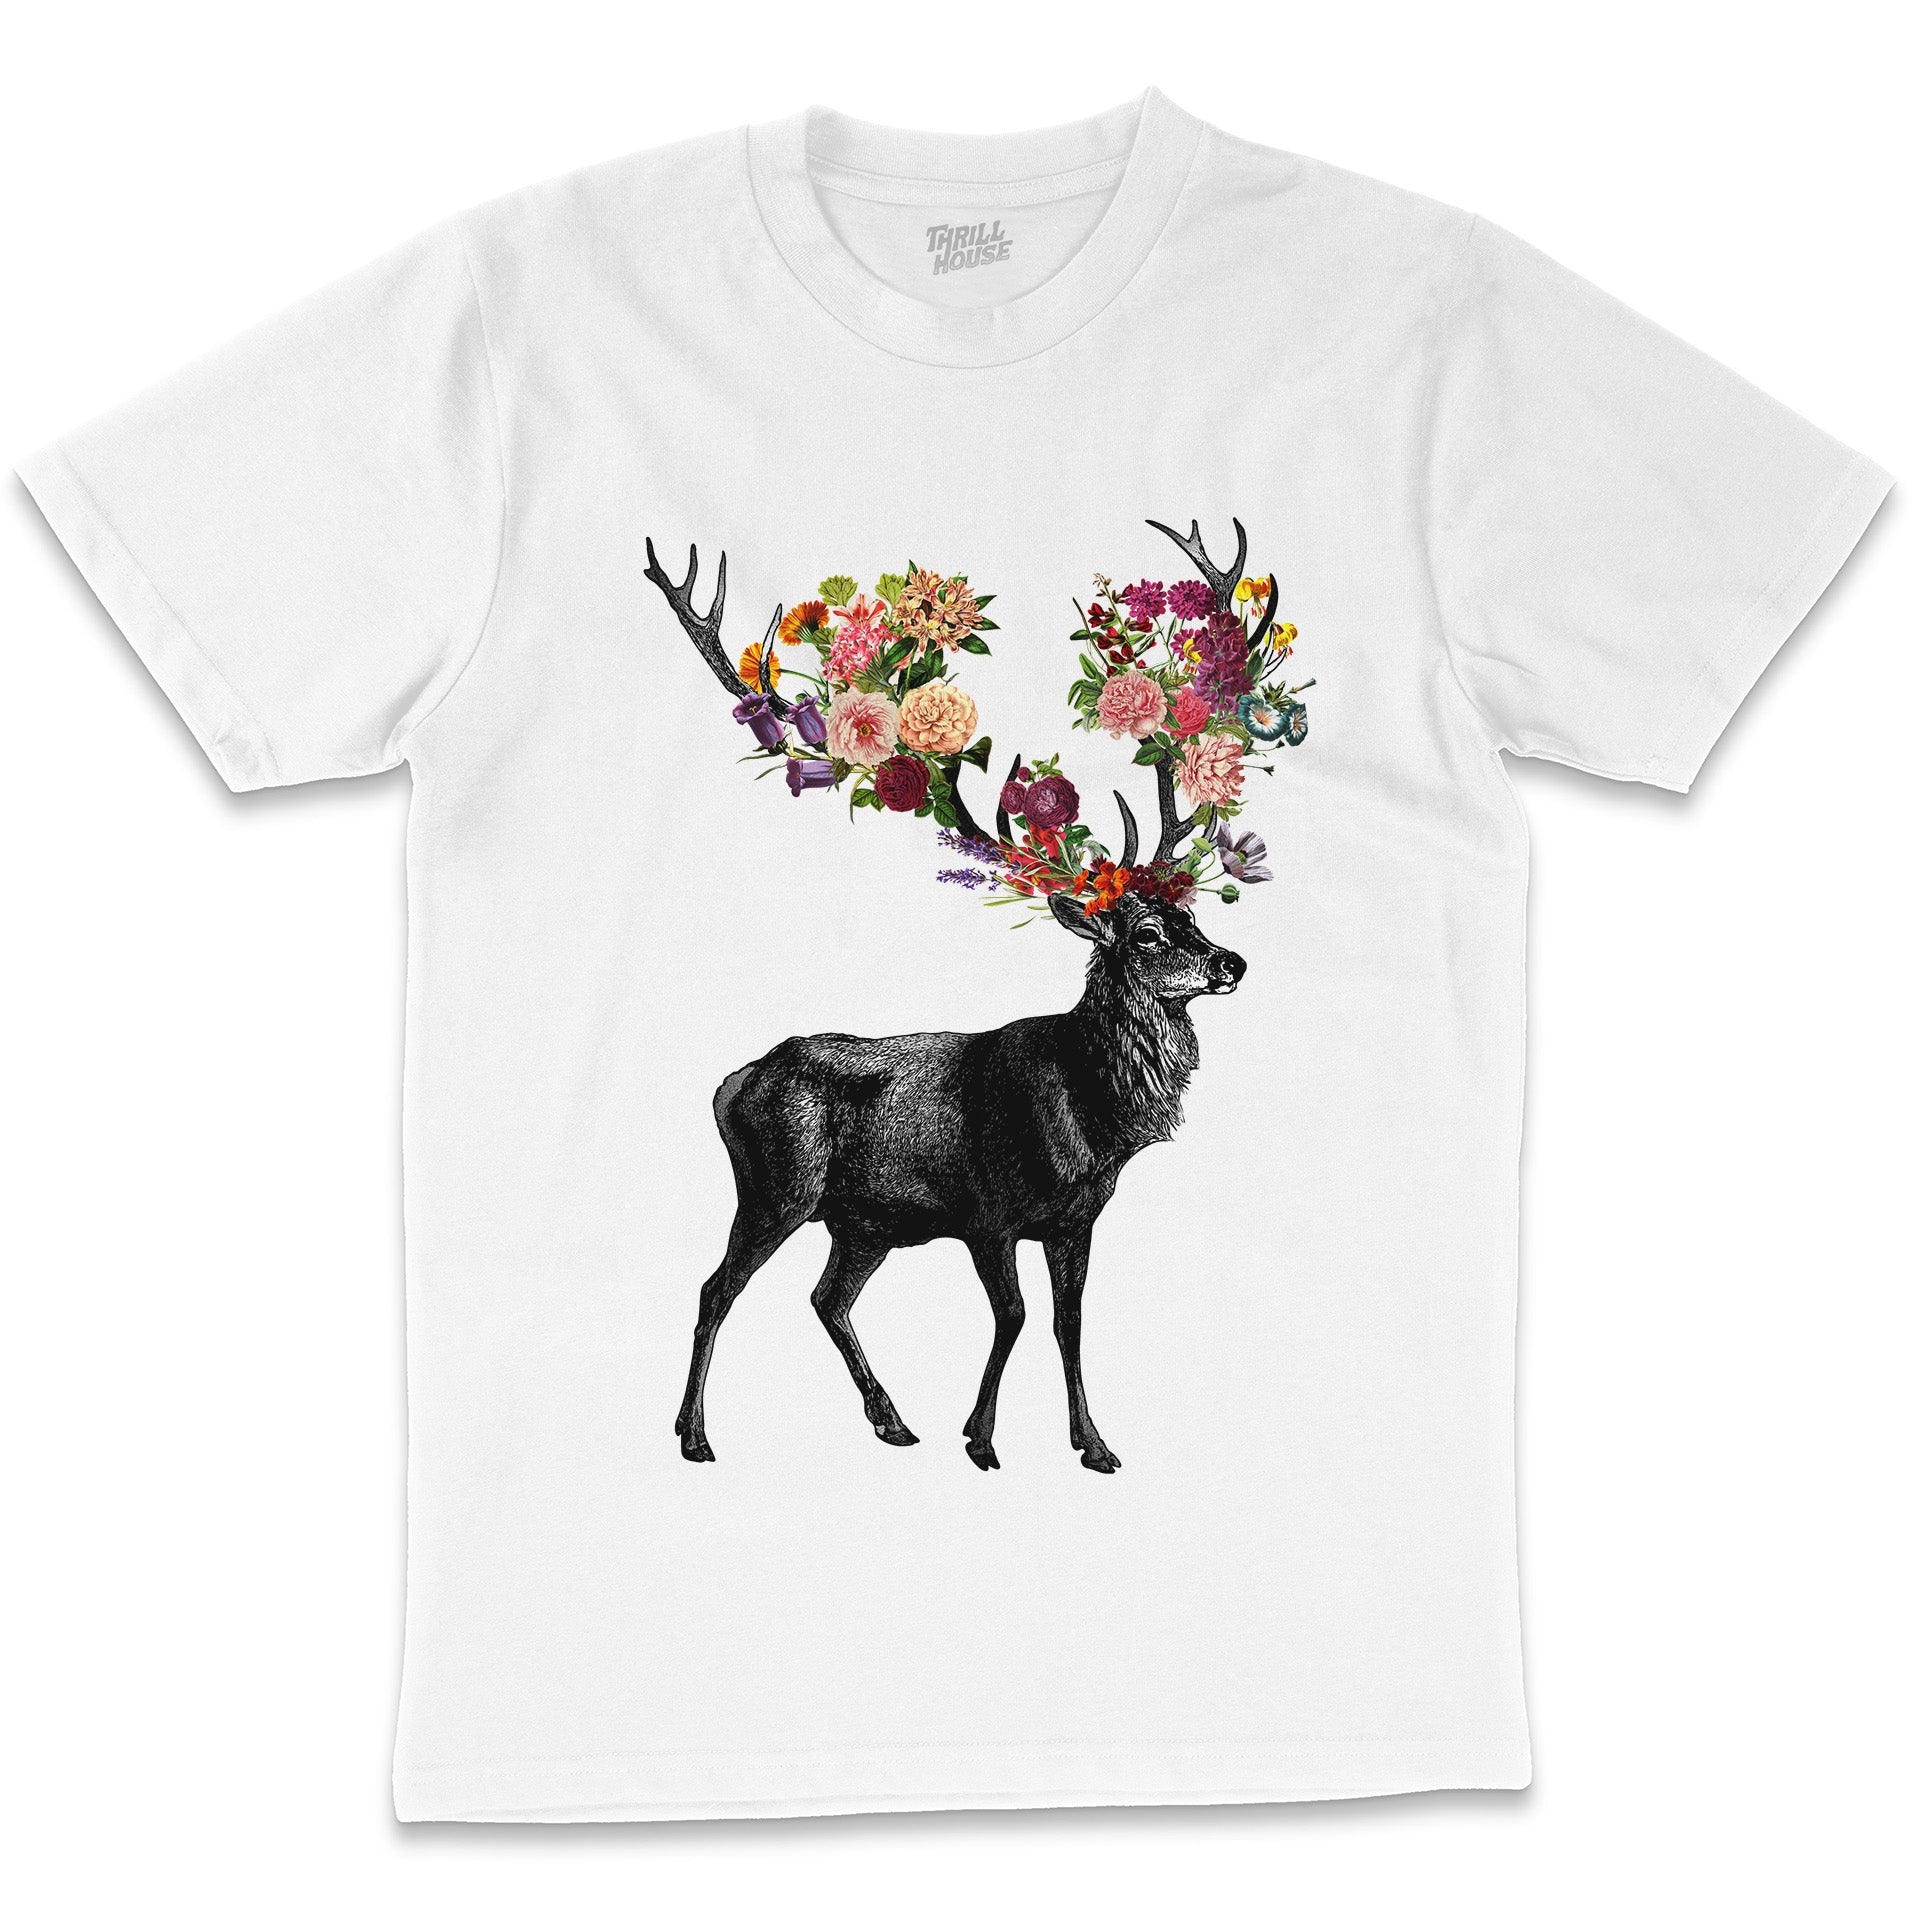 Spring Itself Deer Floral Arrangement Animal Artsy Artistic Reindeer Cotton T-Shirt